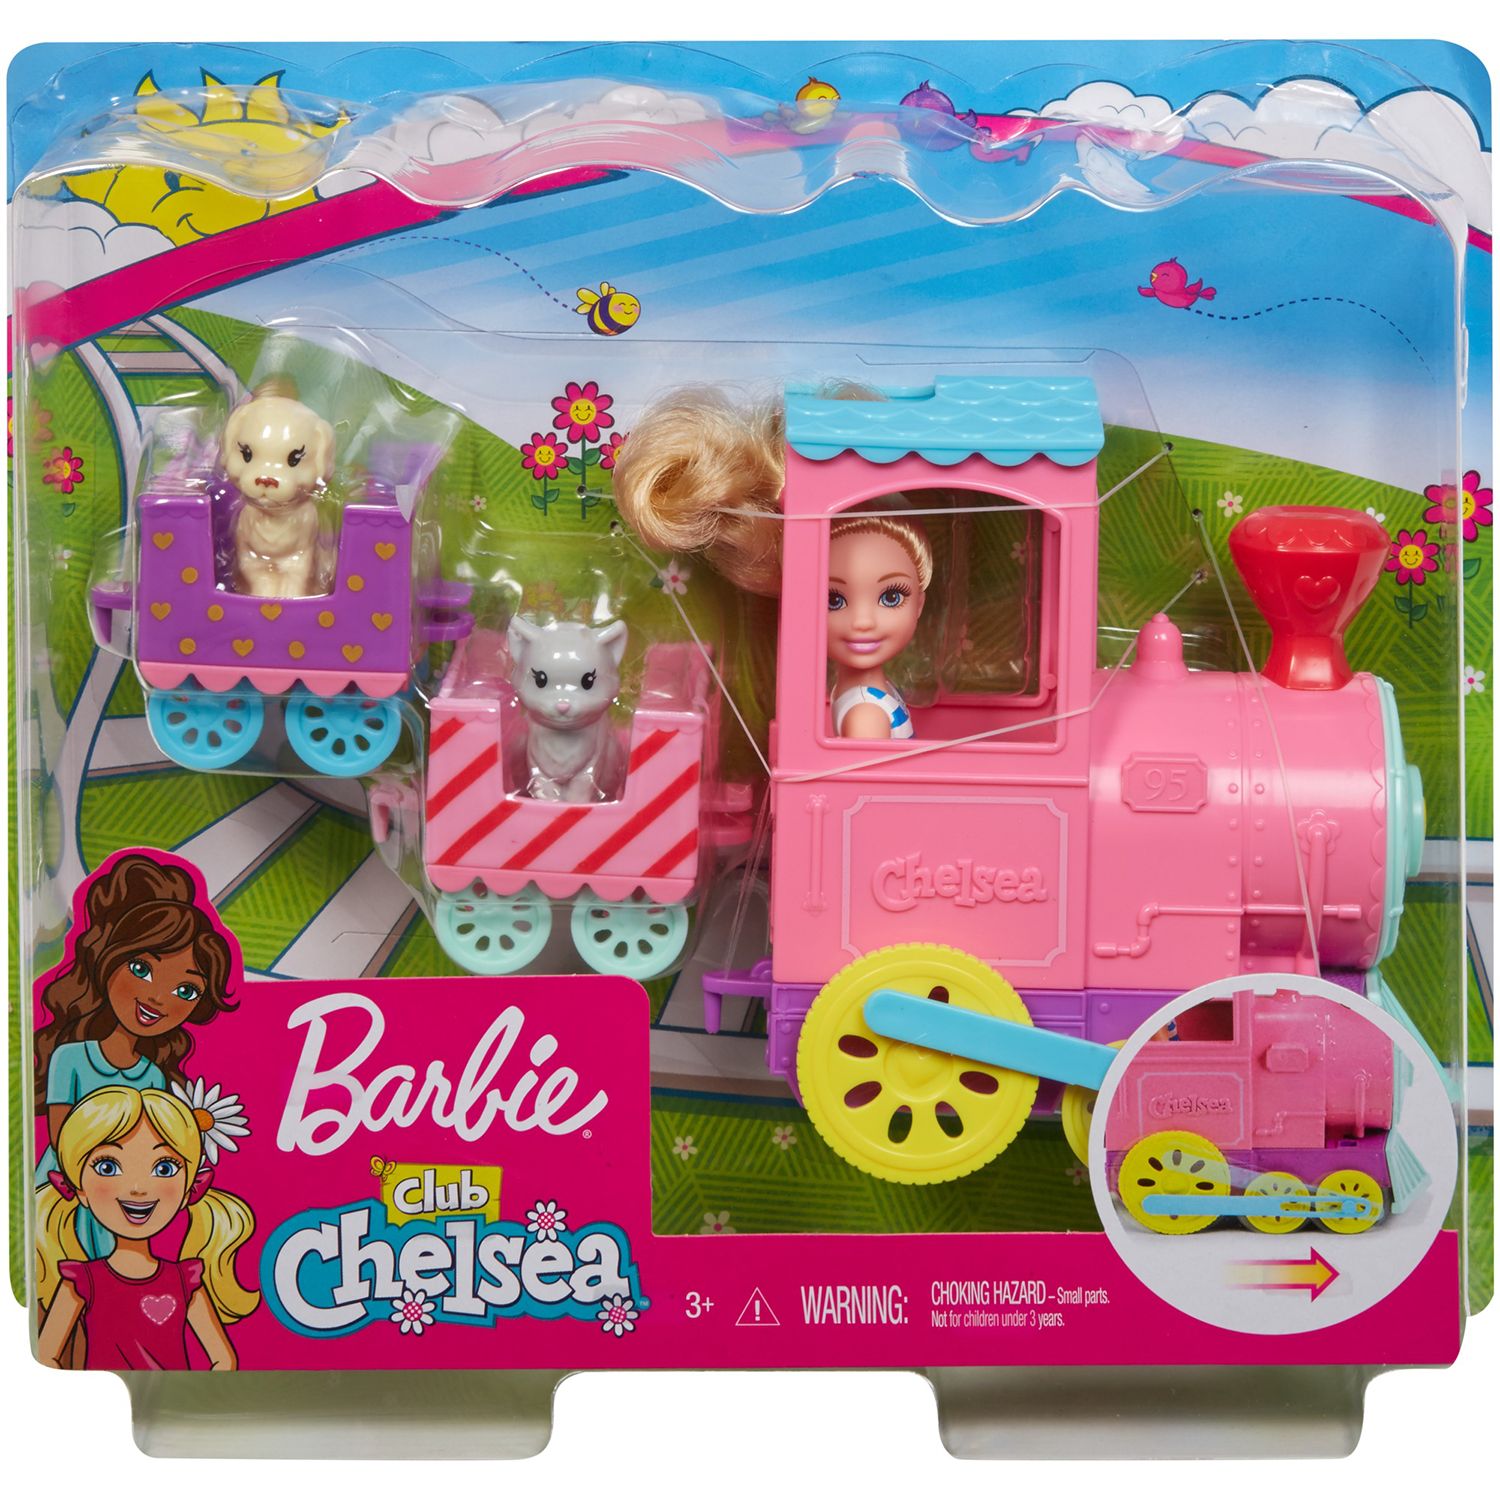 barbie train set